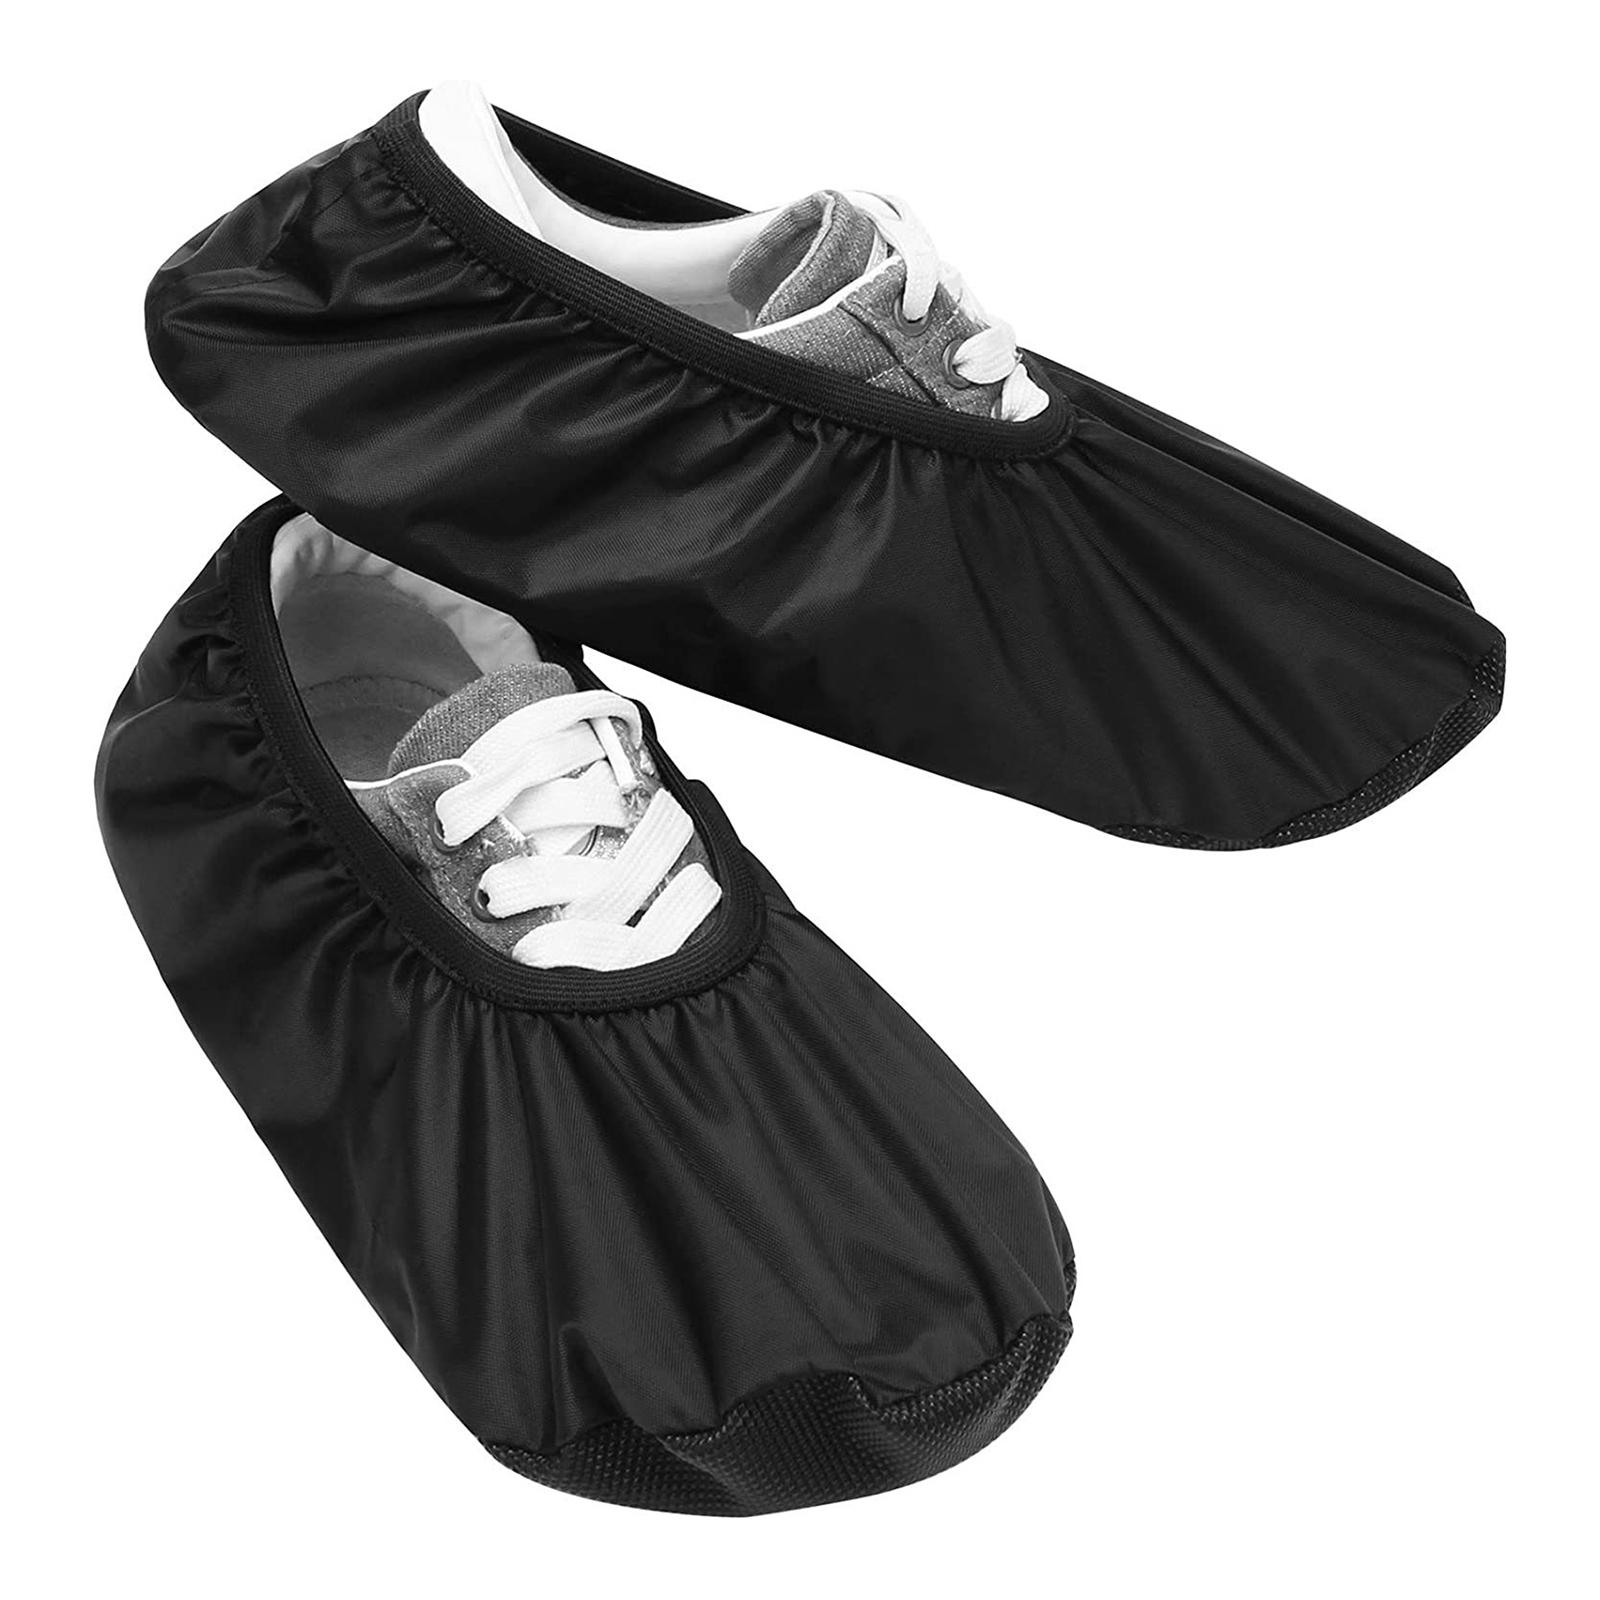 Bowling Shoe Slider Adjustable Shoe Cover Thick for Indoor Sports Teams Kids 37CM